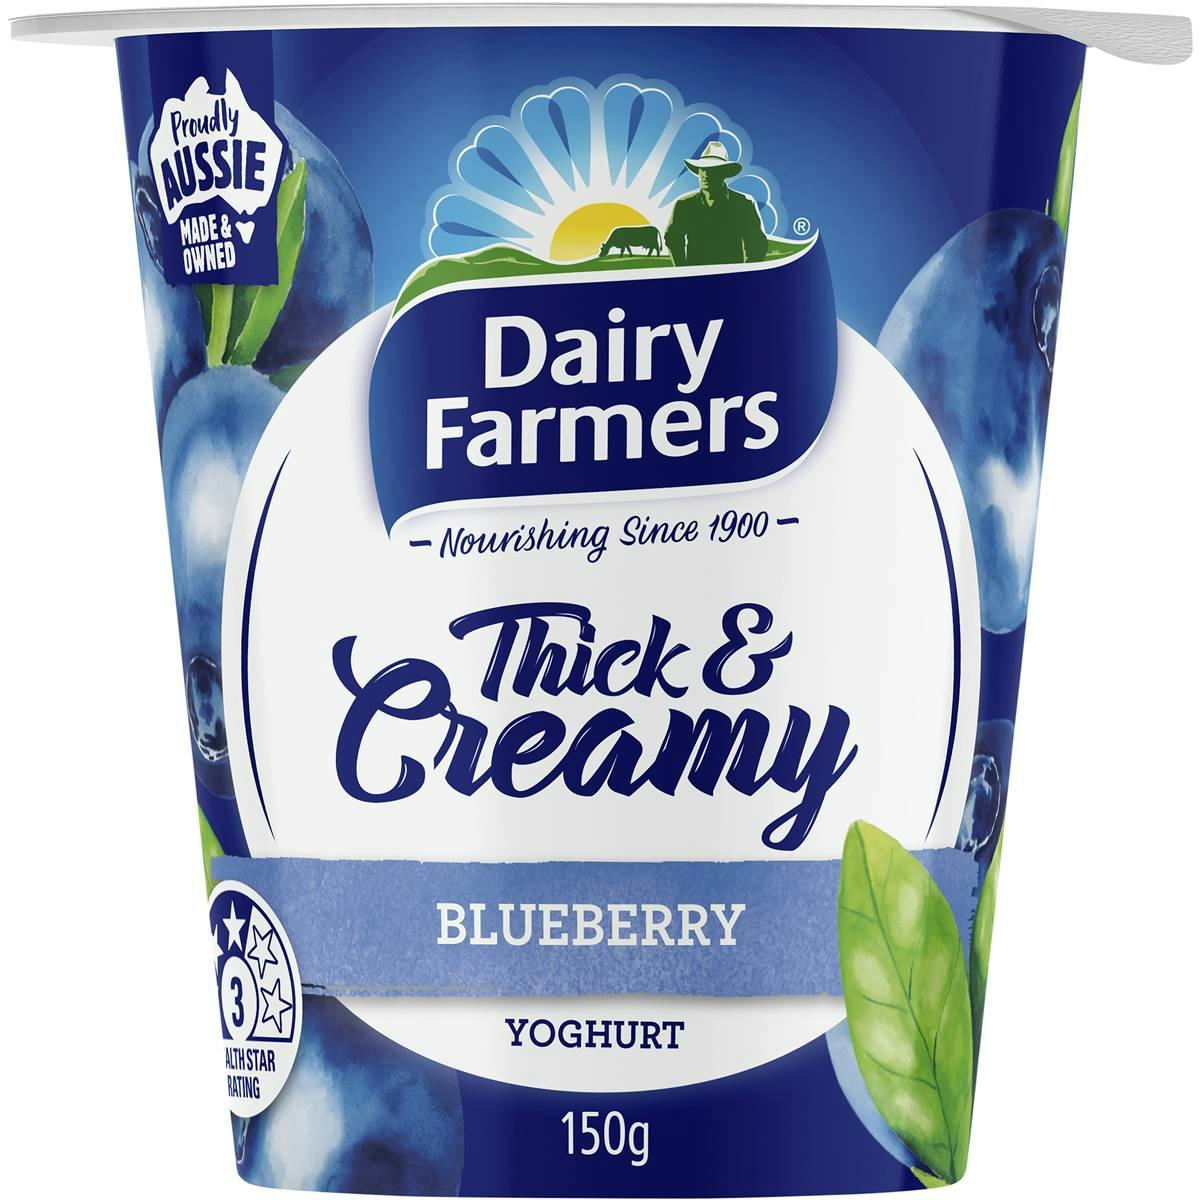 Dairy Farmers Thick & Creamy Blueberry Yoghurt